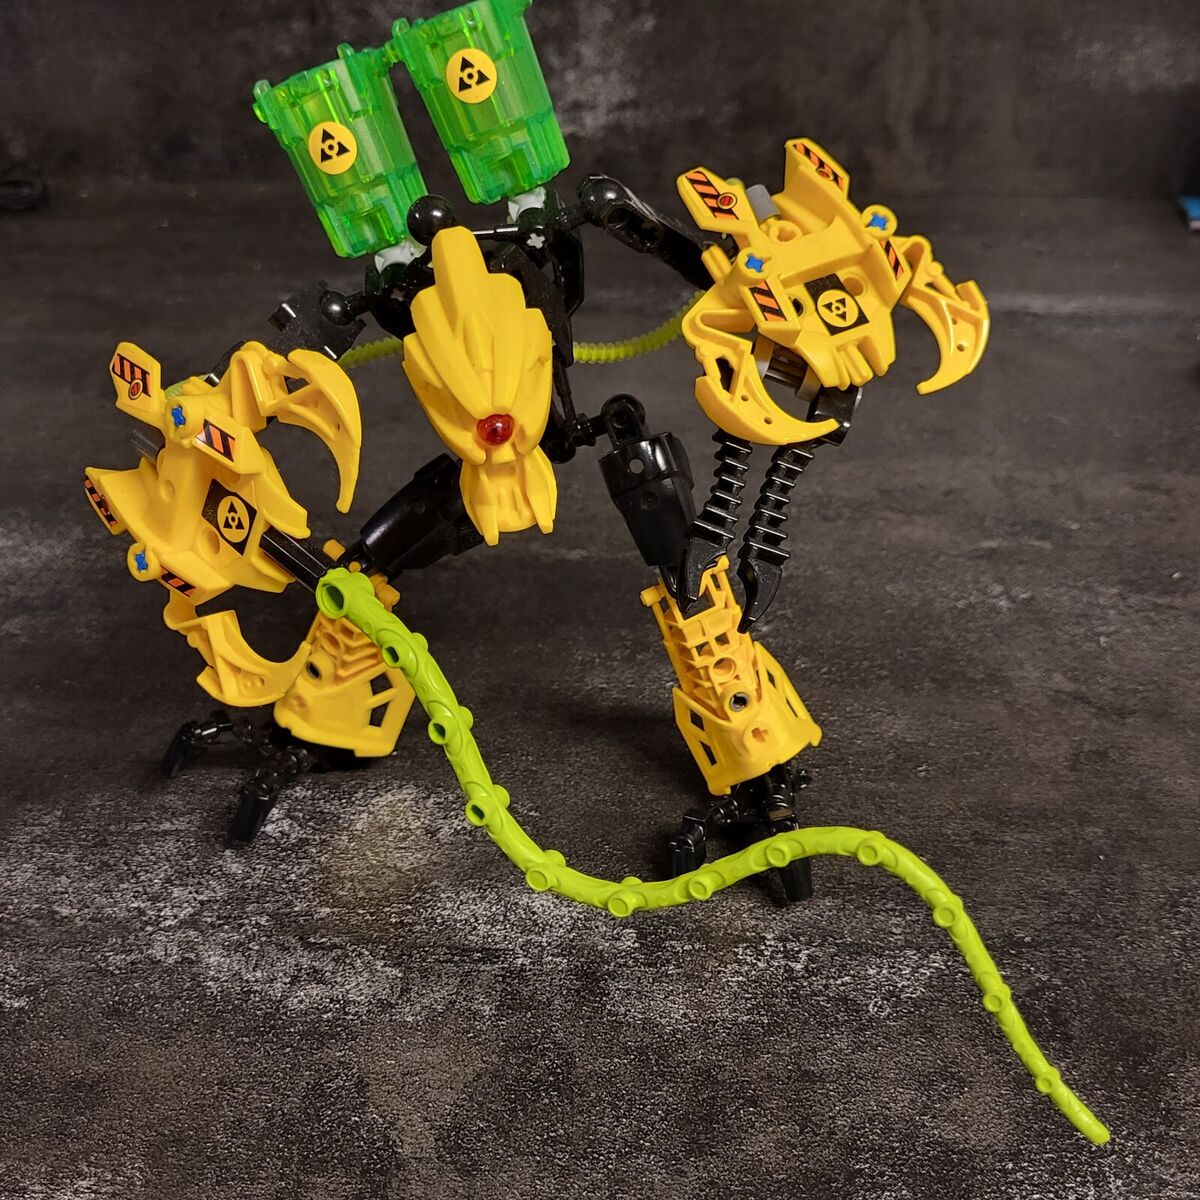 Lego MELTDOWN Bionicle Toxic Hero Factory Figure 2010 Retired Built Loose | eBay